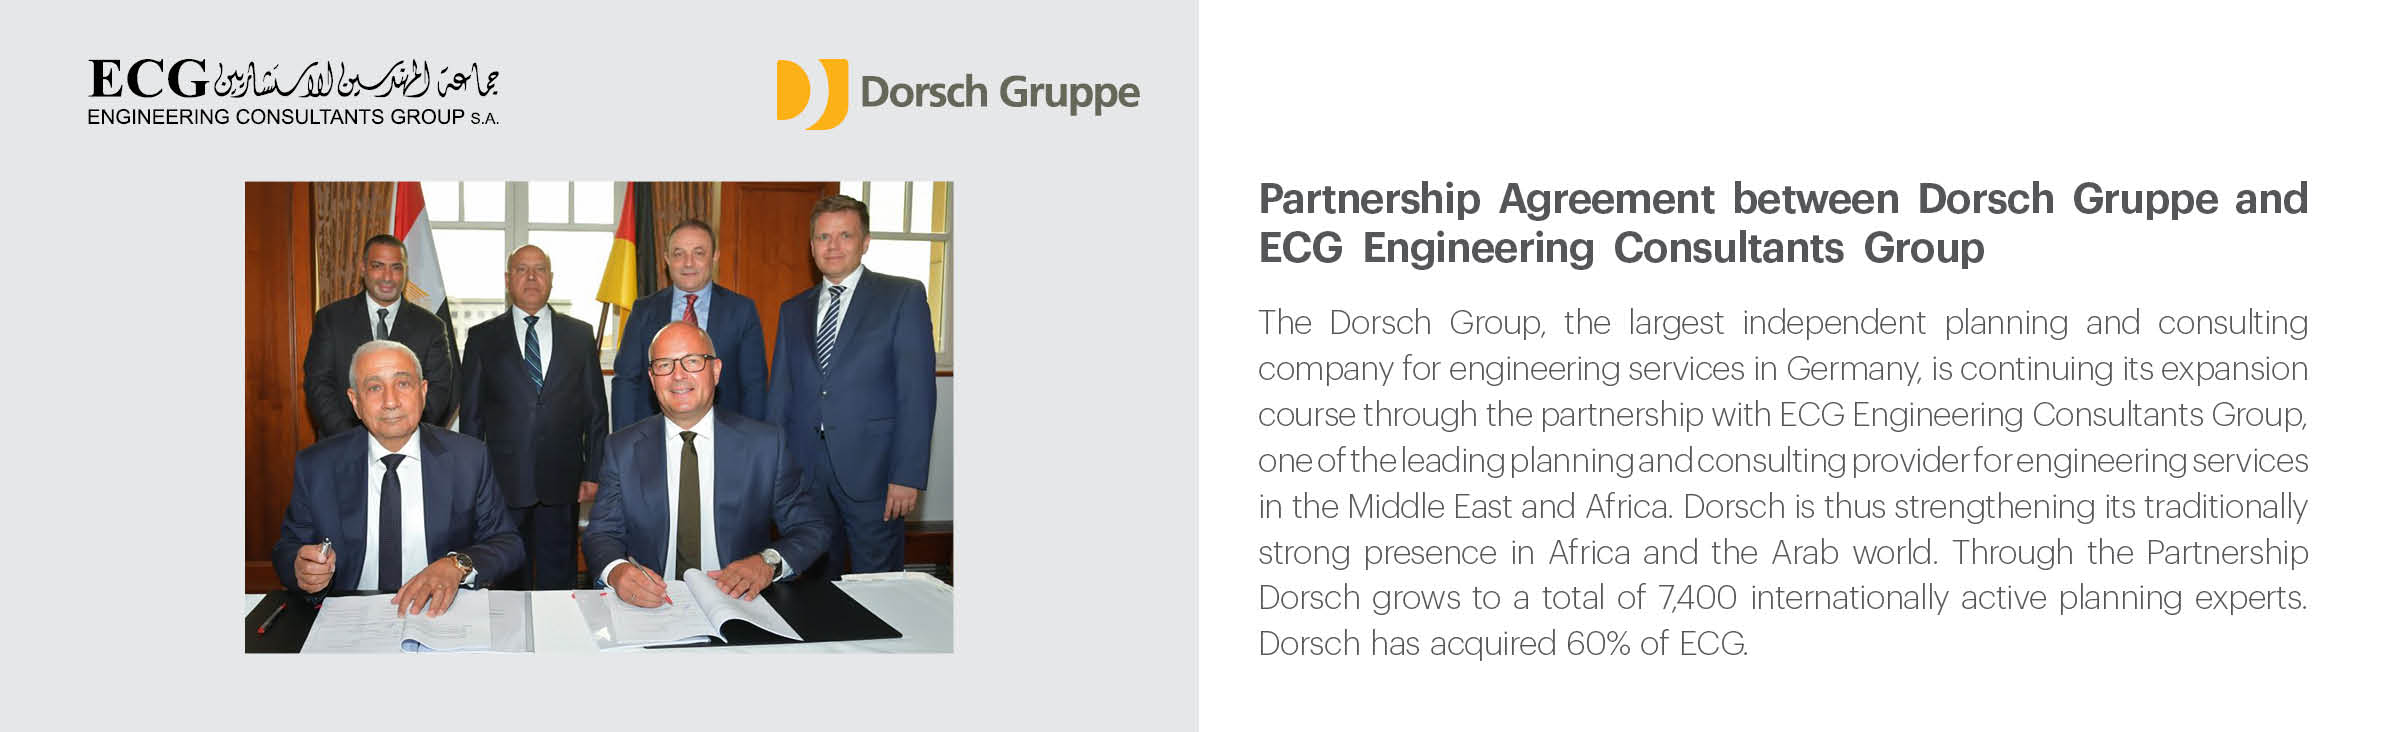 Partnership Agreement between Dorsch Gruppe and ECG Engineering Consultants Group